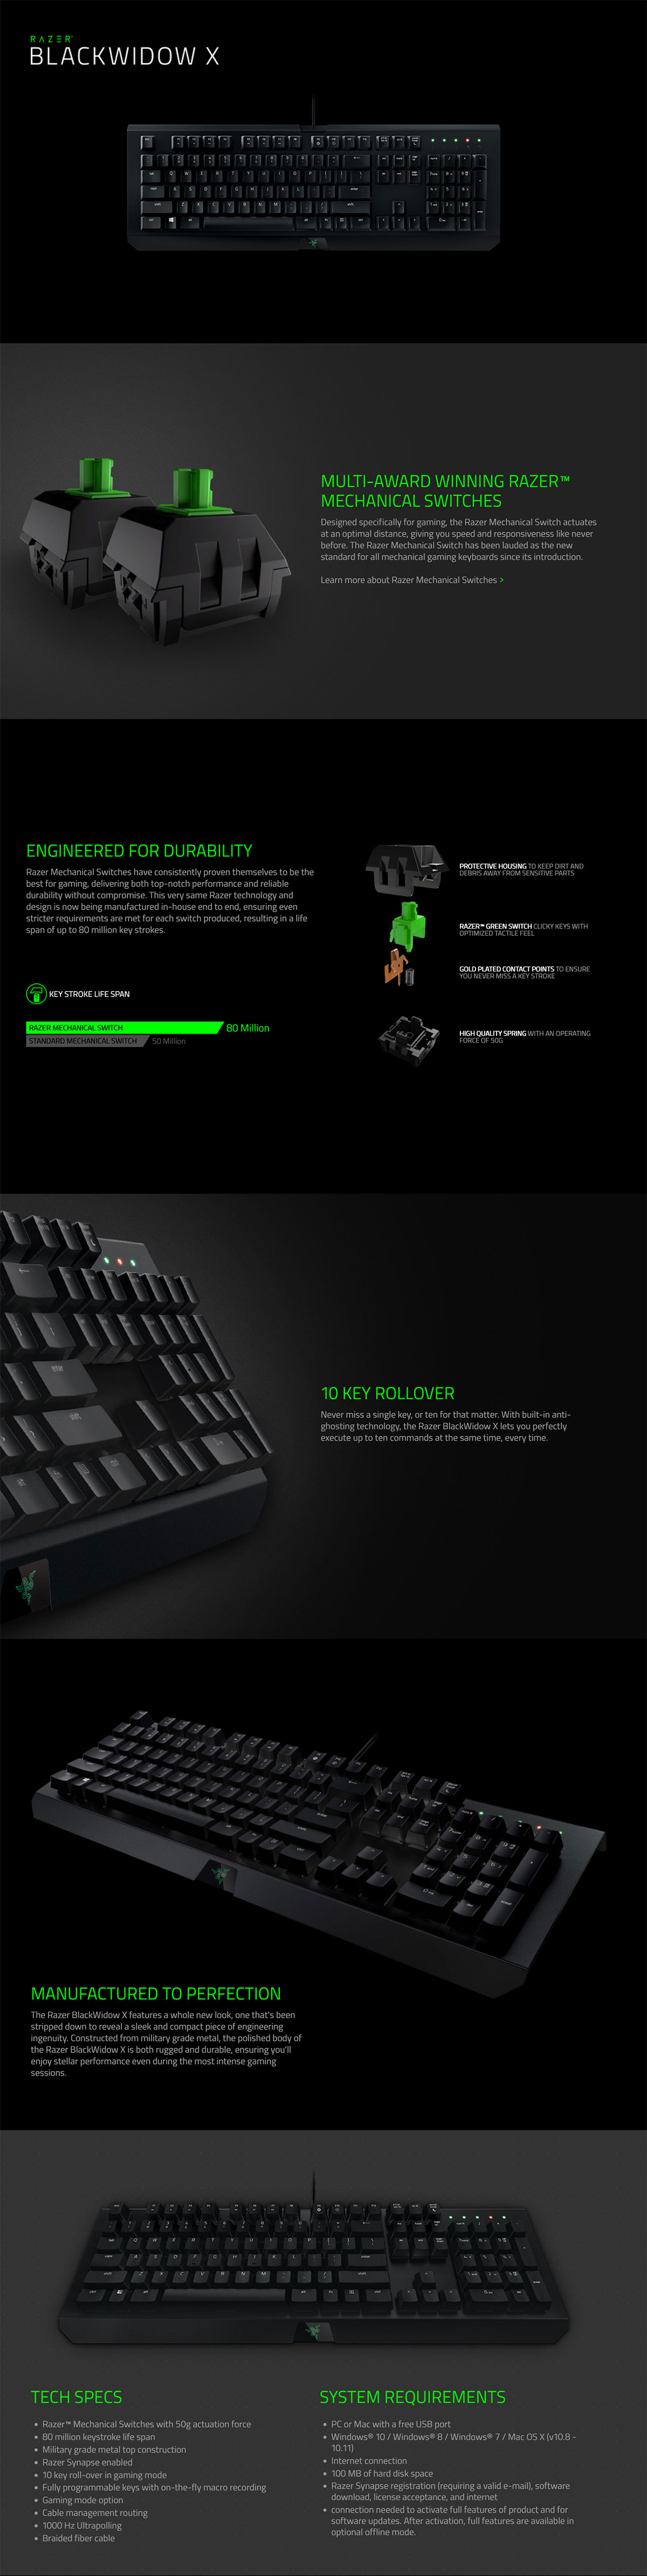 Razer BlackWidow X Tournament Edition Chroma - RGB Mechanical Gaming Keyboard RZ03-01770100-R3M1 Details